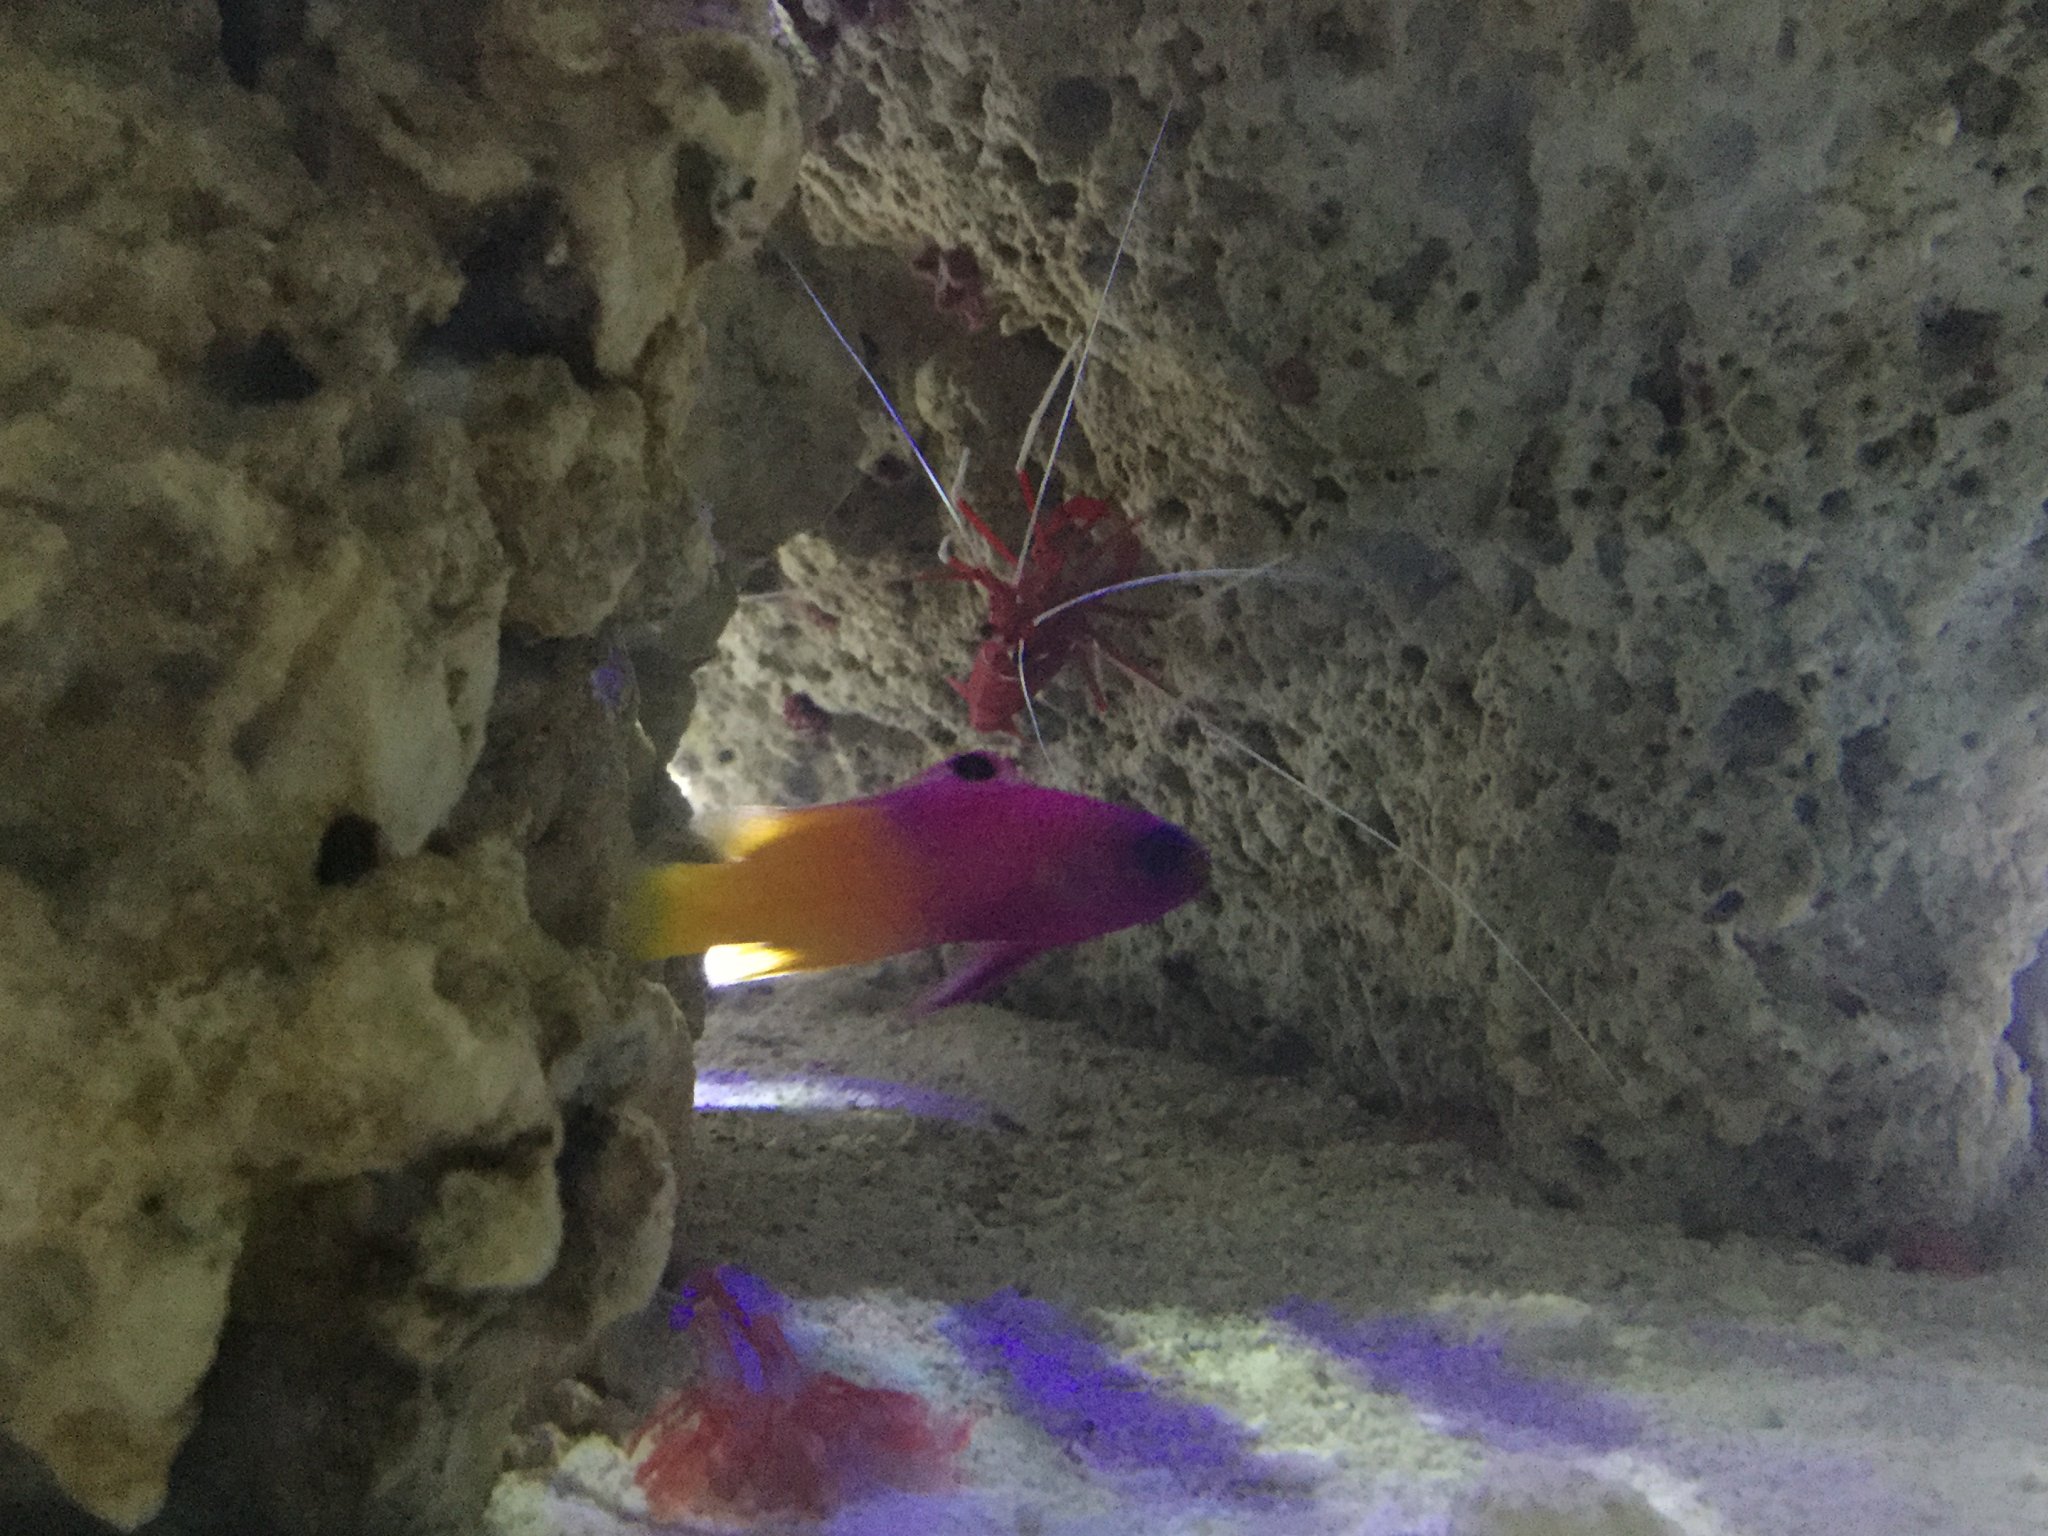 Gramma and shrimp